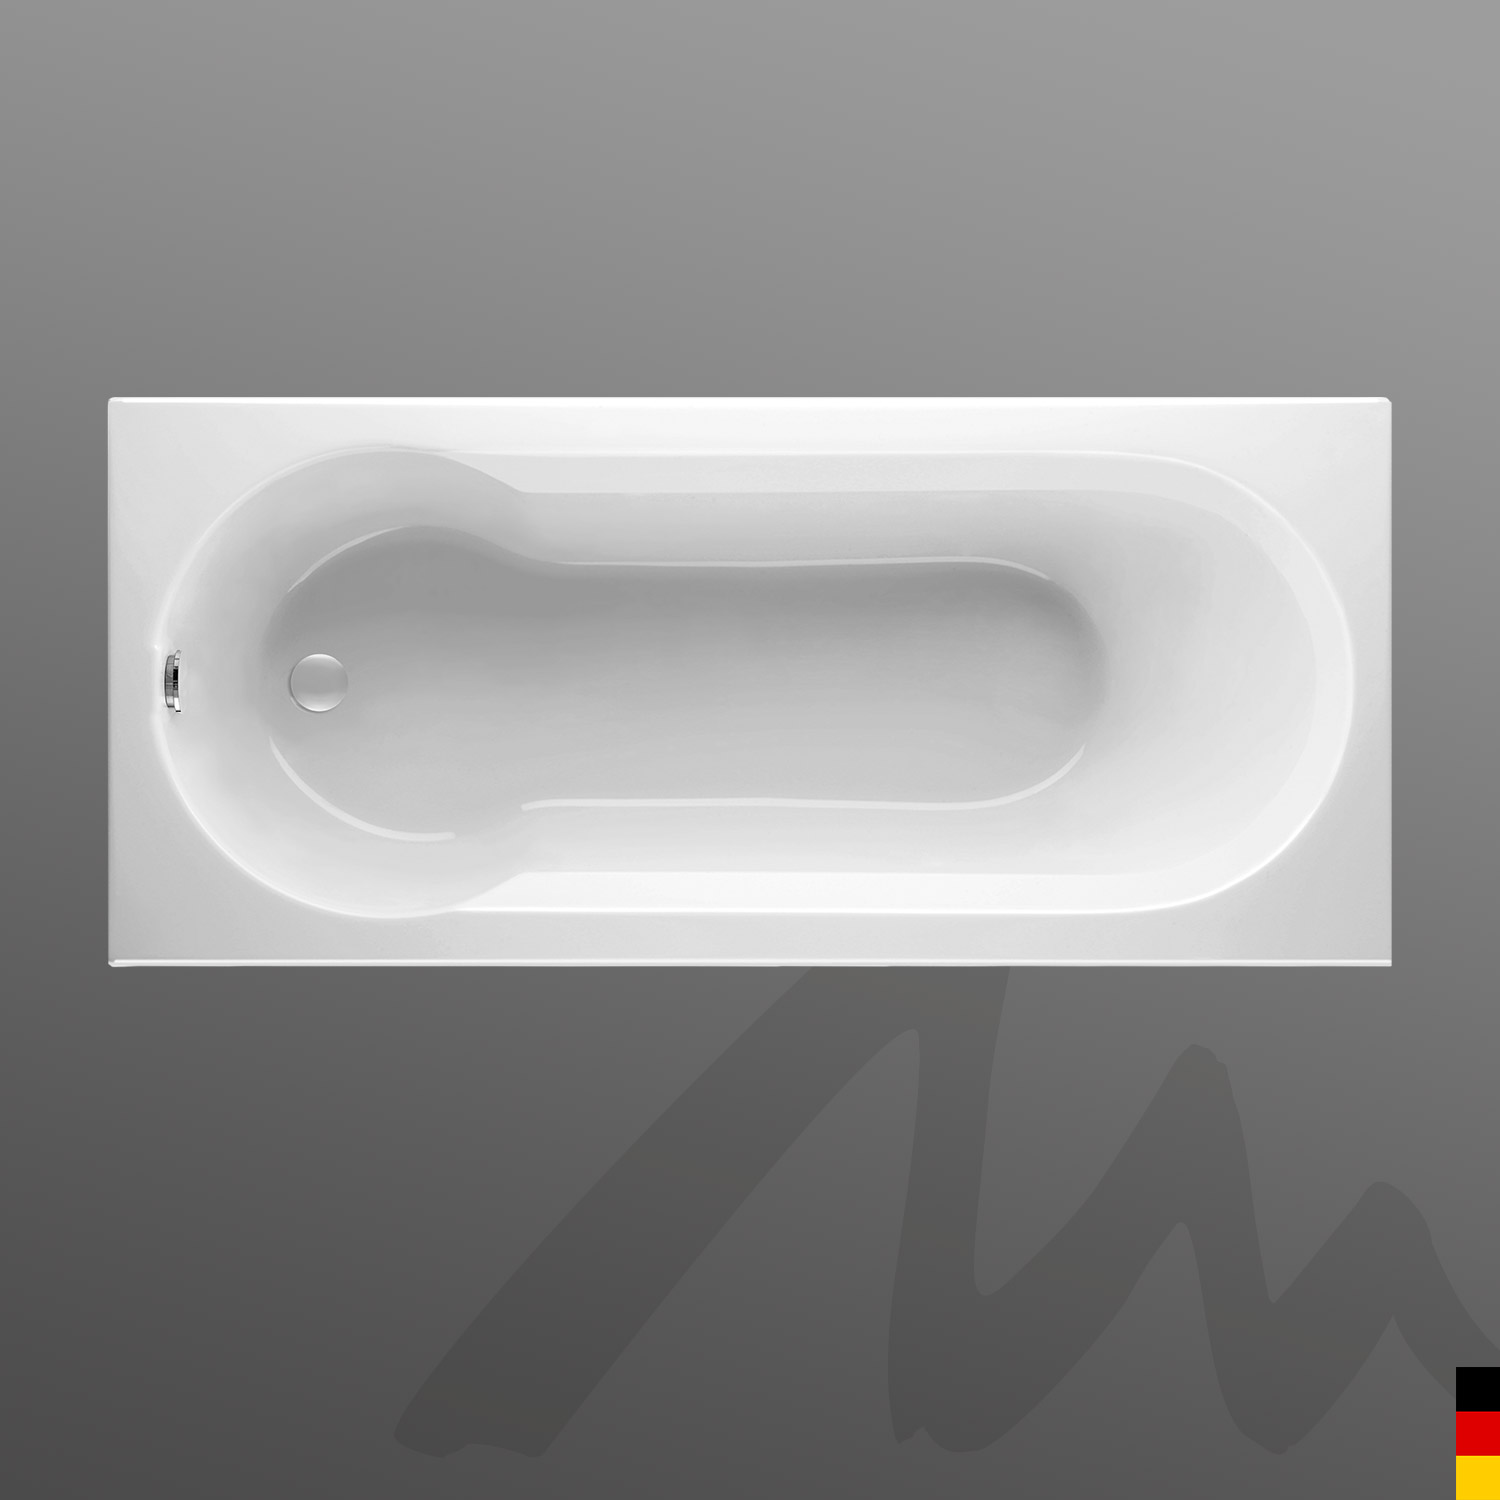 Mauersberger Badewanne Rechteck Idria 170/75  170x75x45  Farbe:weiß